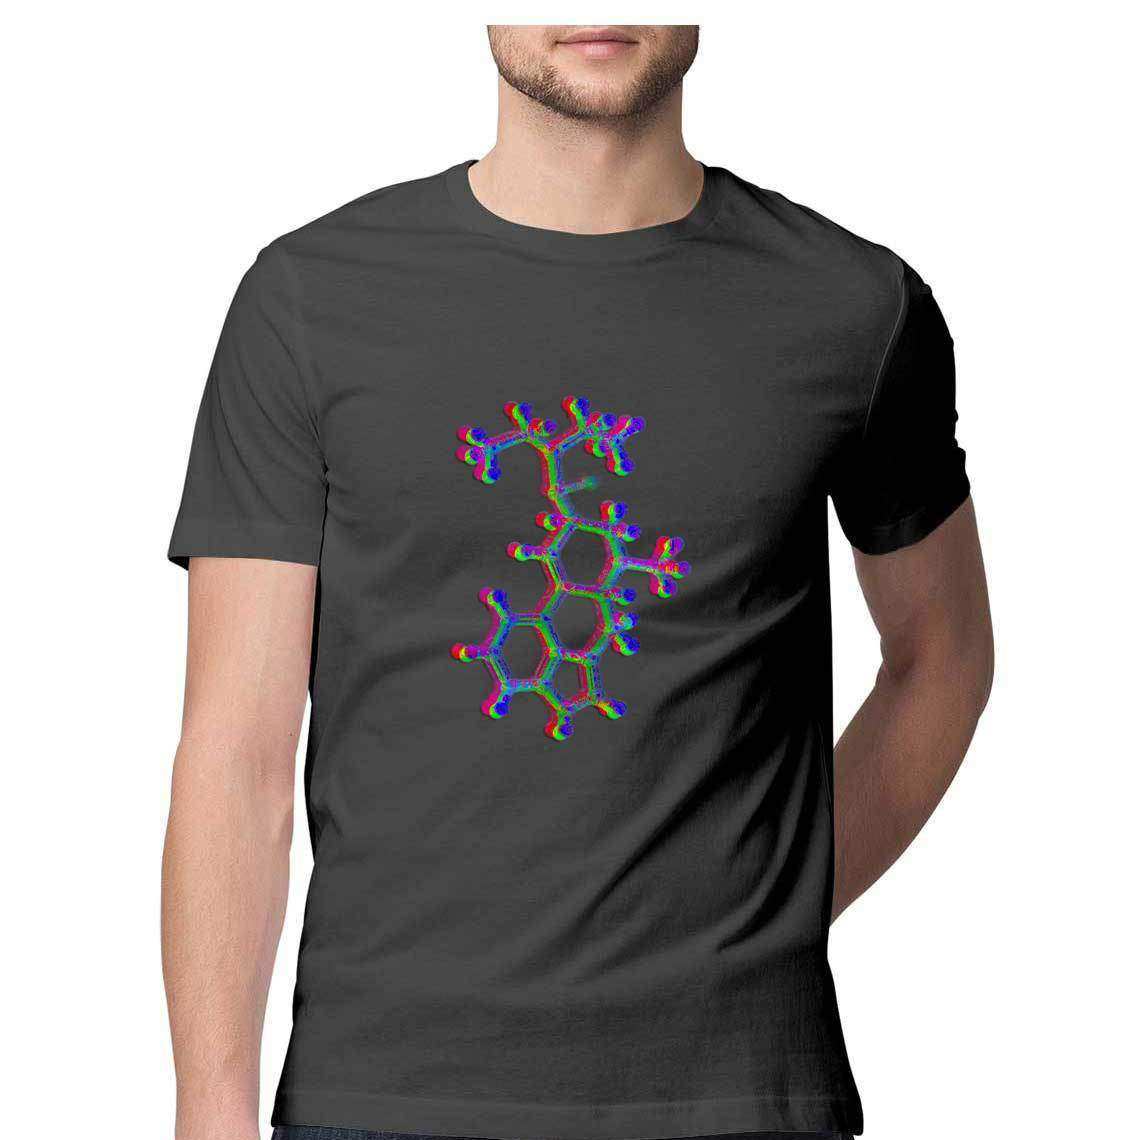 The L.S.D Molecule Men's T-Shirt - CBD Store India